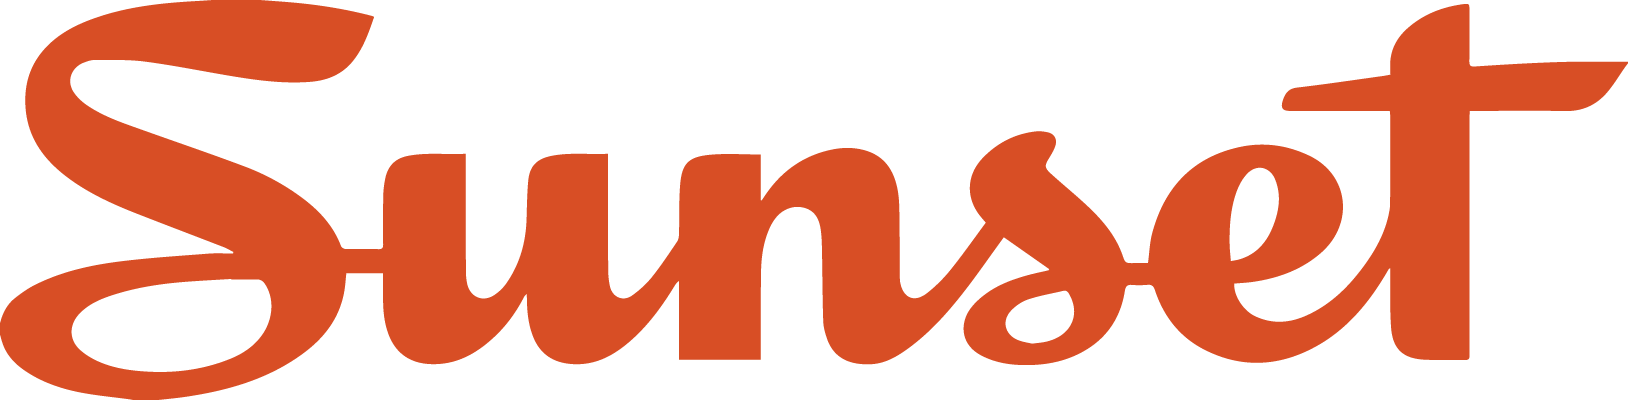 Sunset Logo PNG HD